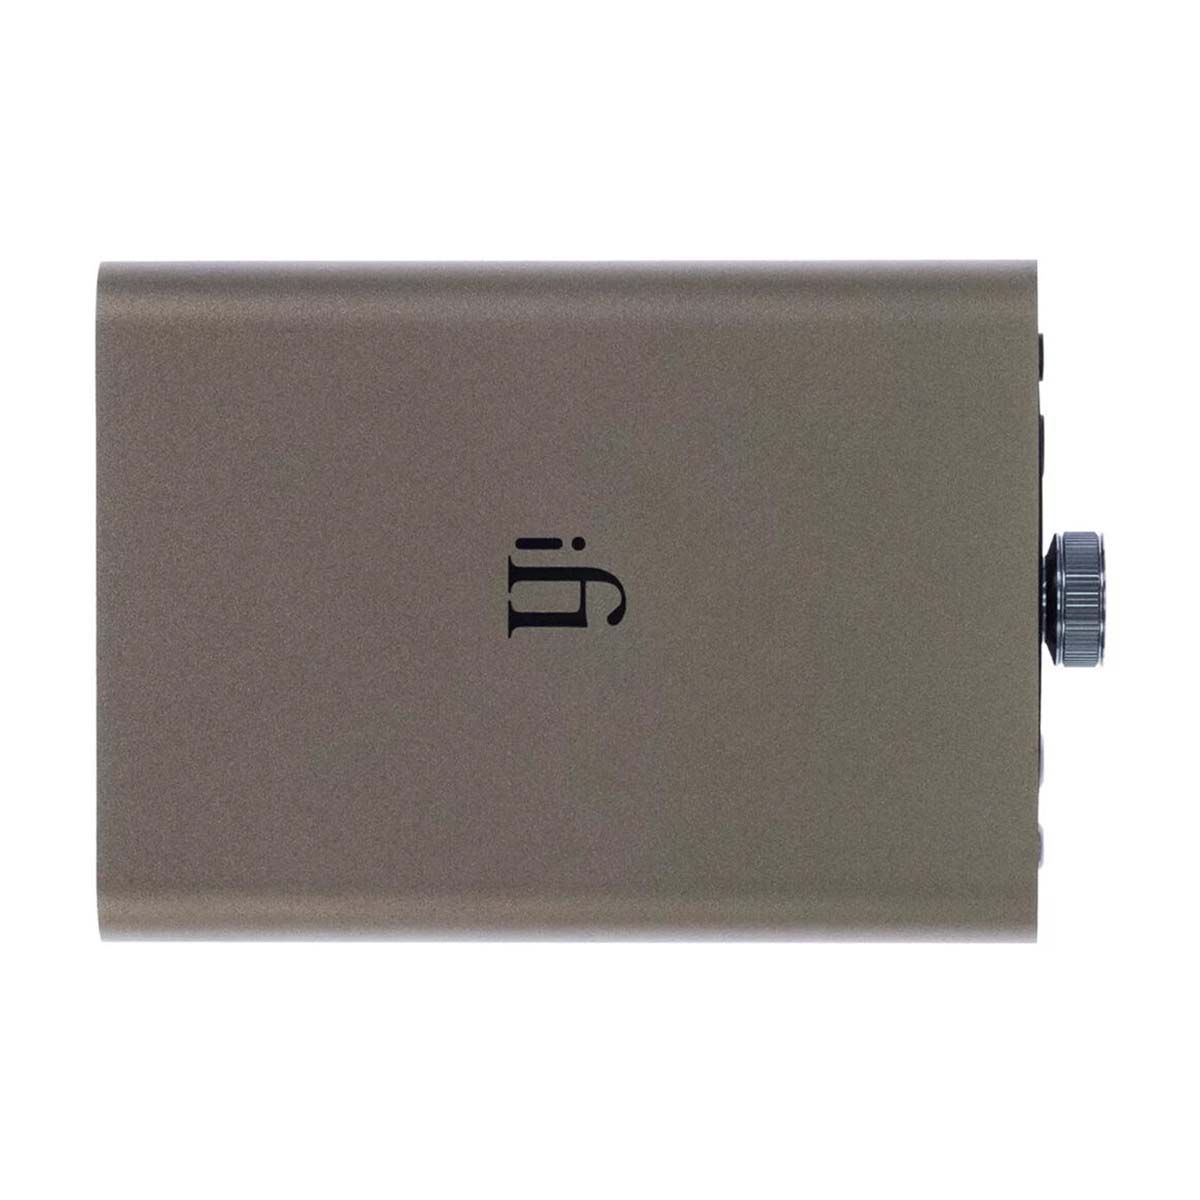 iFi Audio hip-dac 3 Portable USB DAC and Headphone Amplifier - top view